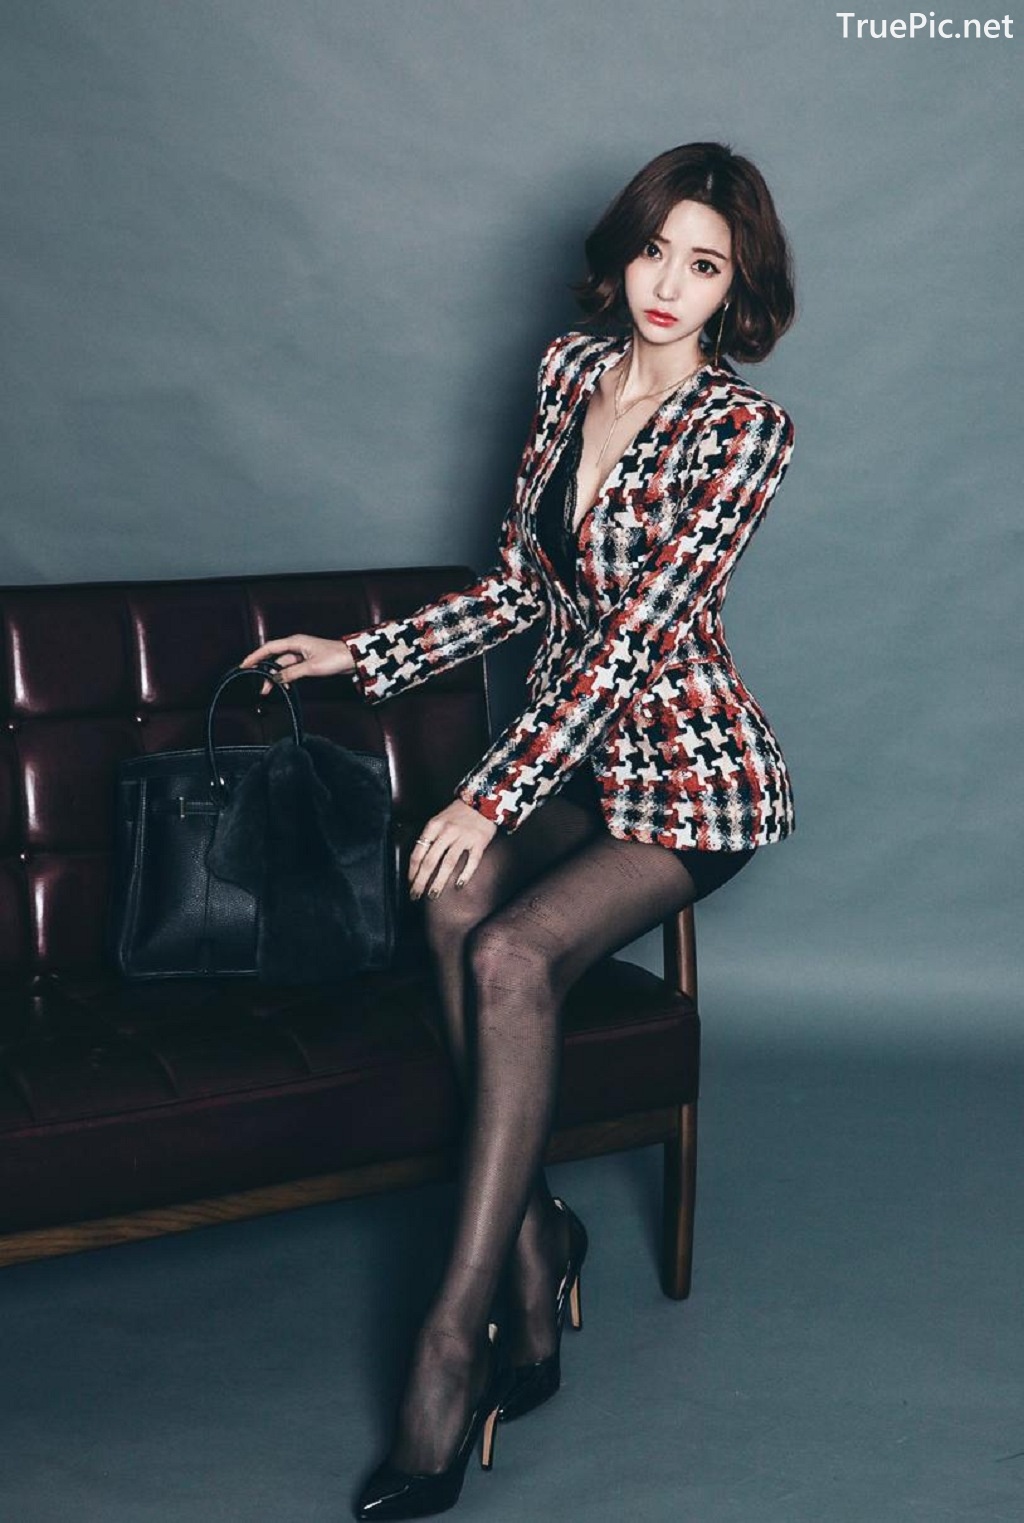 Image Ye Jin - Korean Fashion Model - Studio Photoshoot Collection - TruePic.net - Picture-49